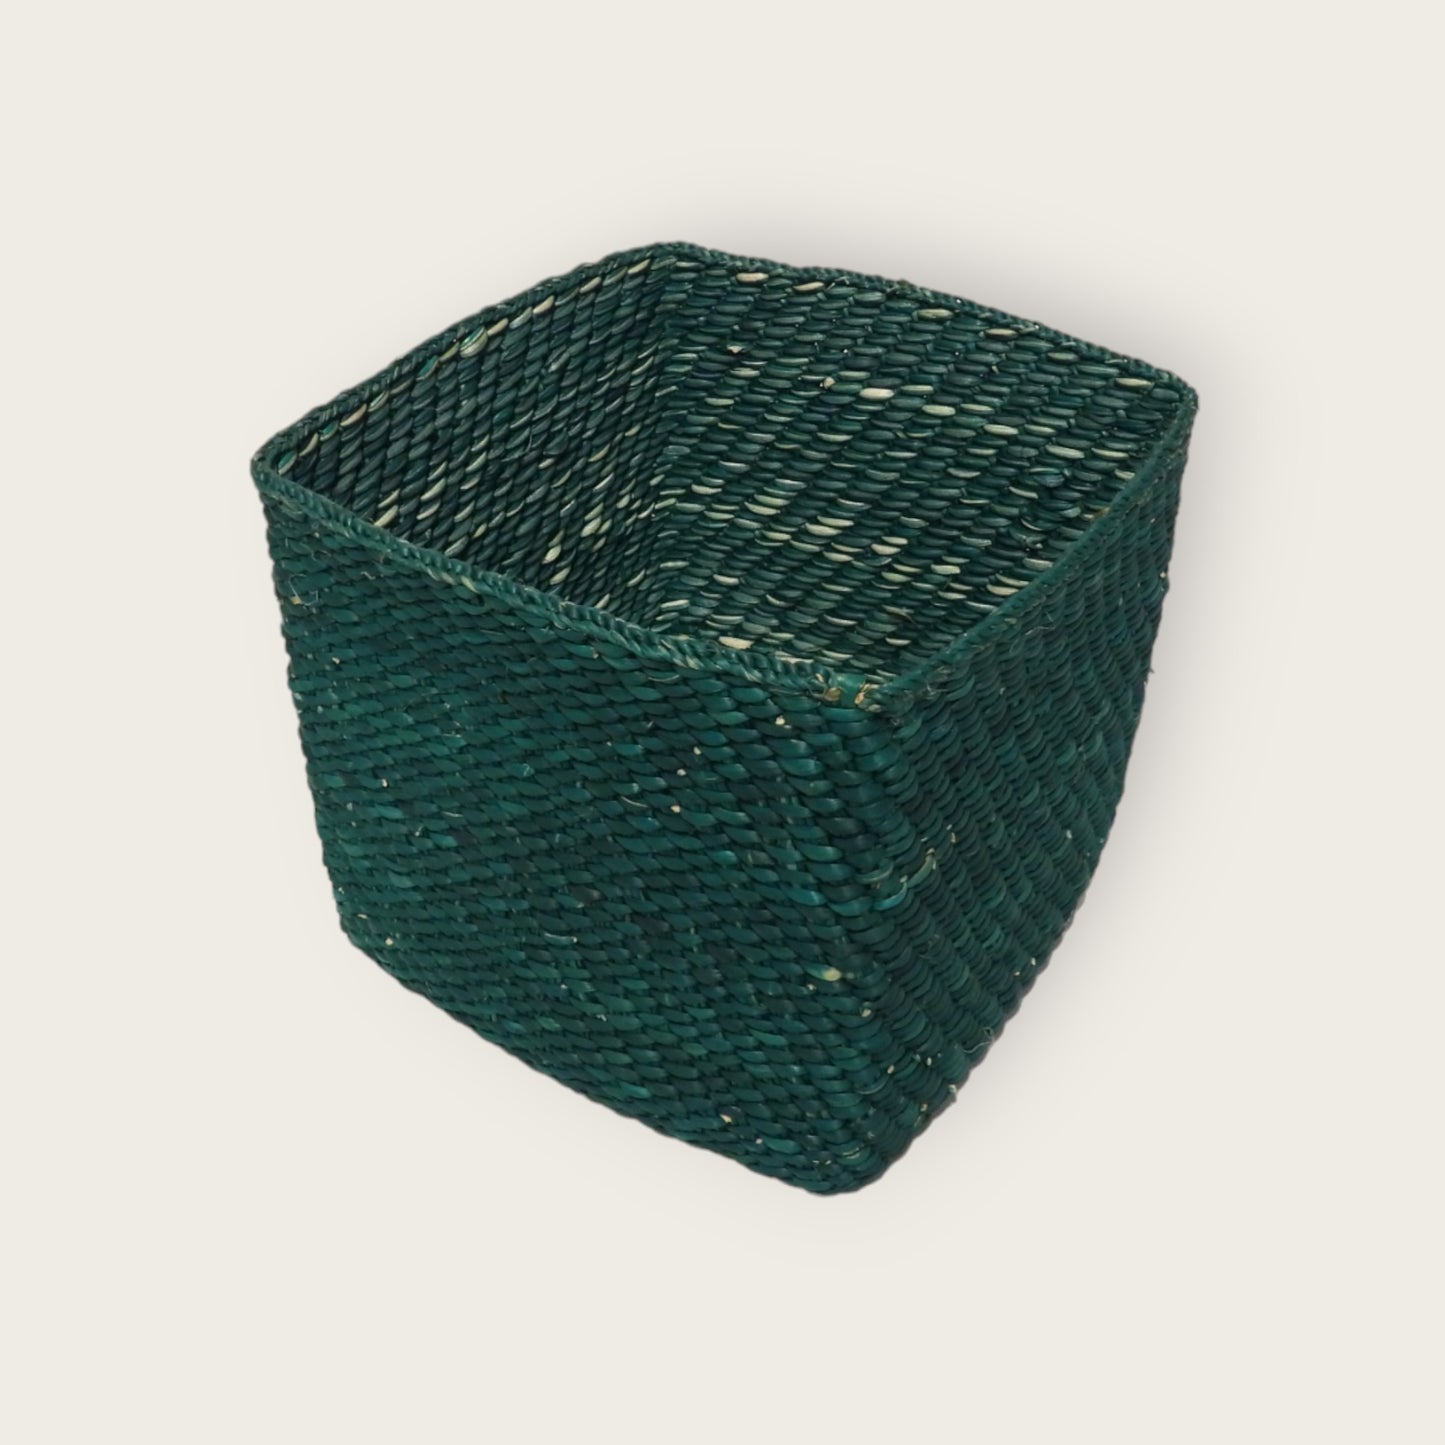 PEMBE Basket - Green